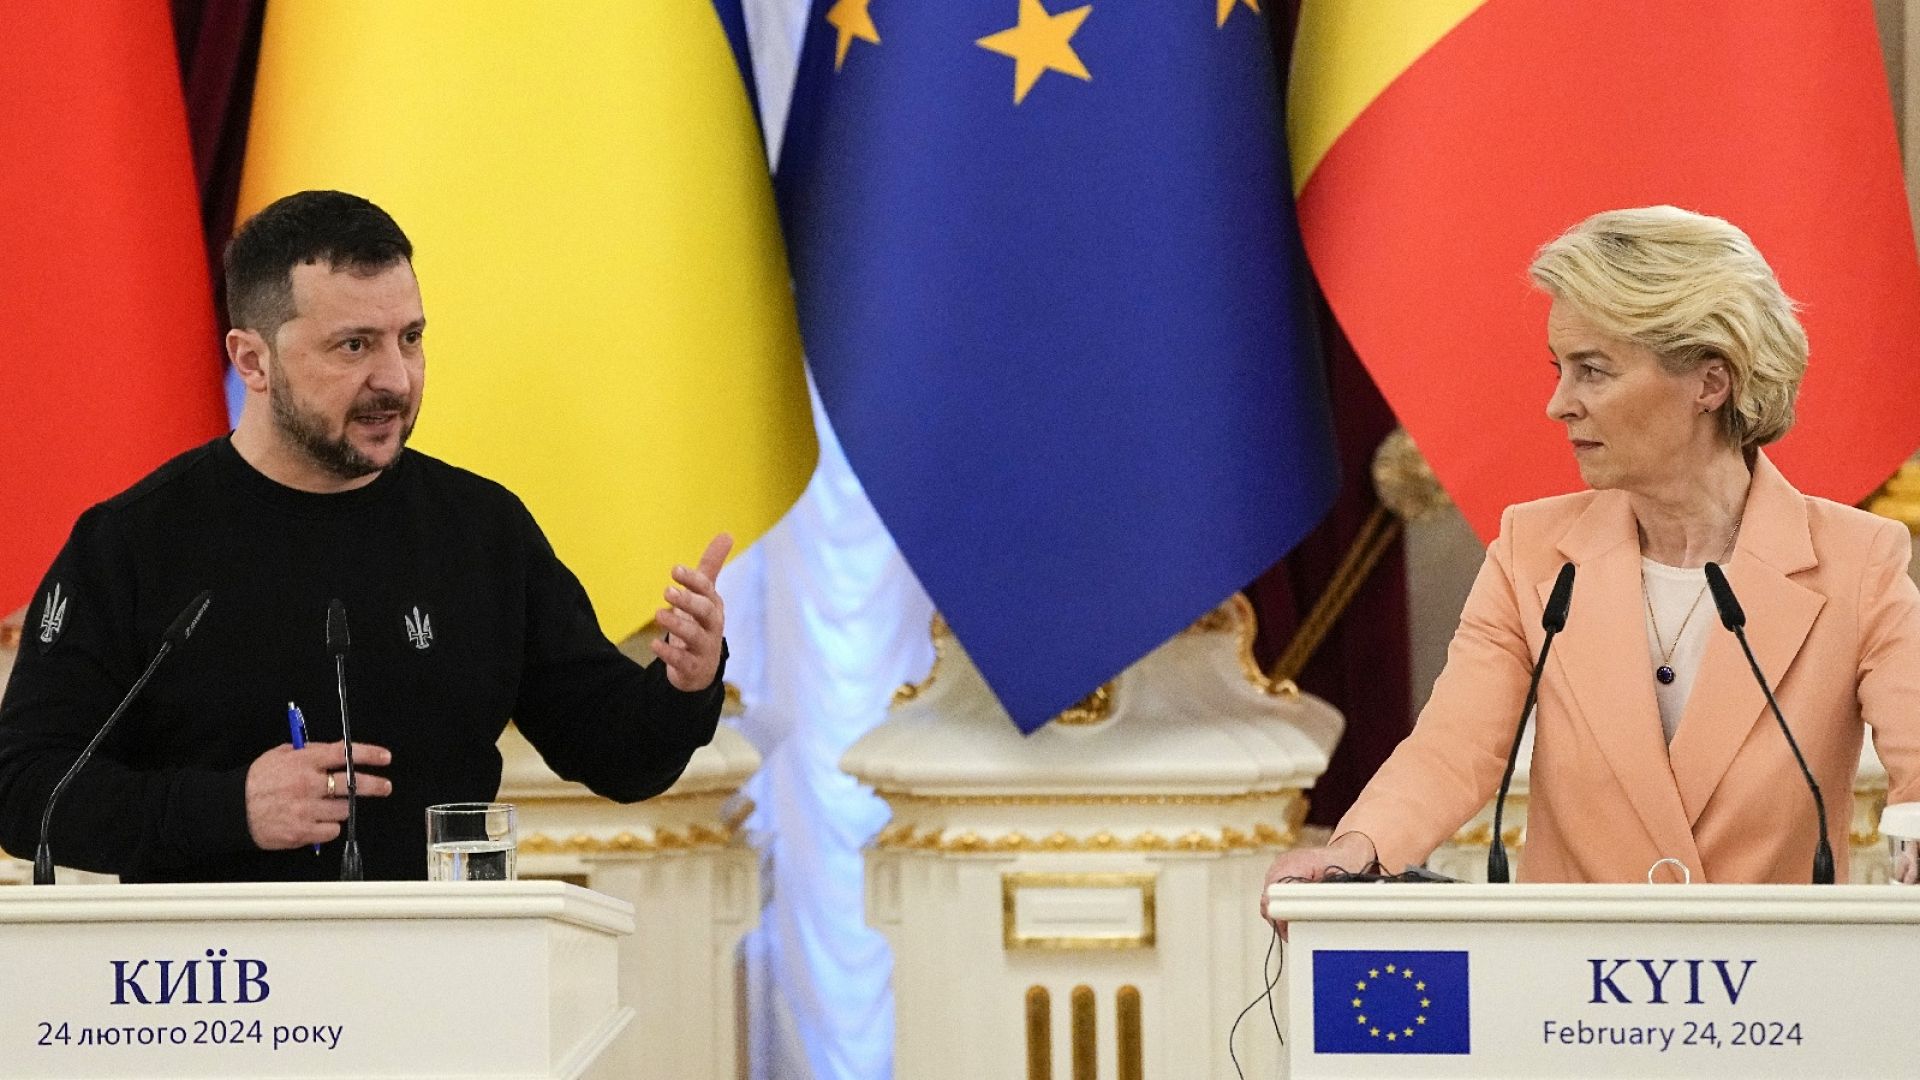 POLL: EU should continue to support Ukraine against Putin’s terror 👍